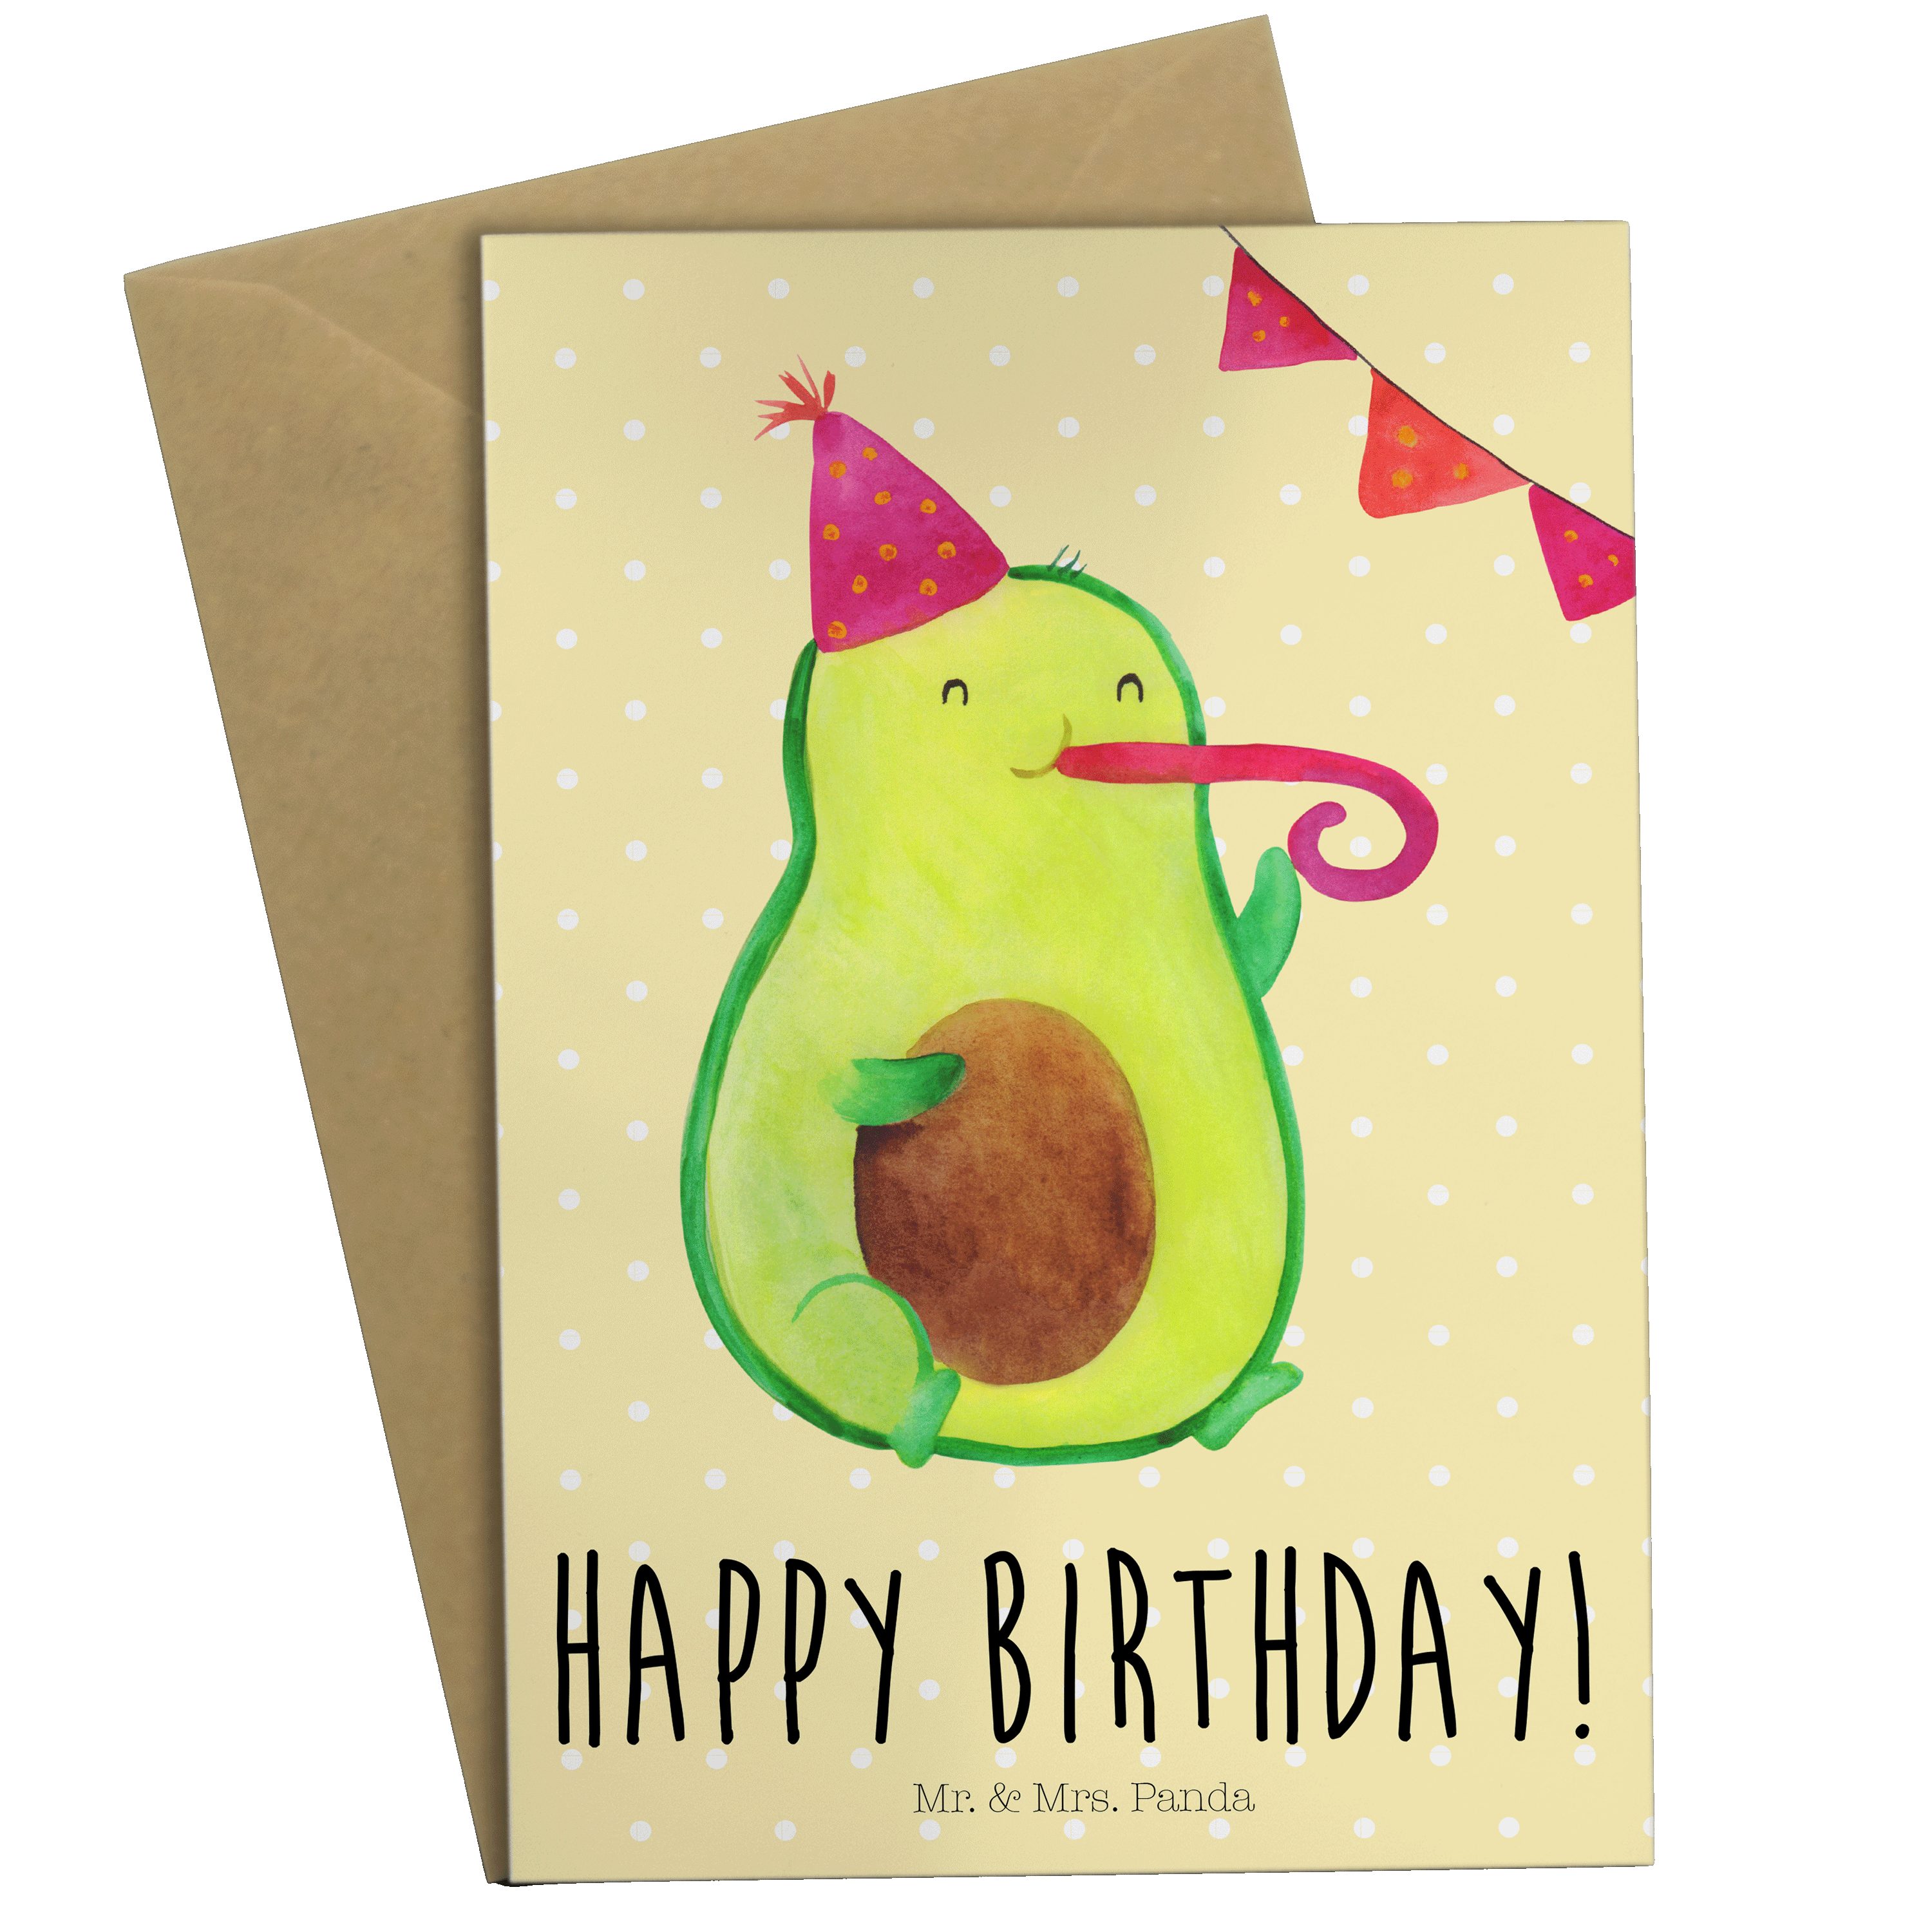 Mr. & Mrs. Panda - Party, - Grußkarte Geb Birthday Avocado Gelb Geschenk, Pastell Vegan, Veggie